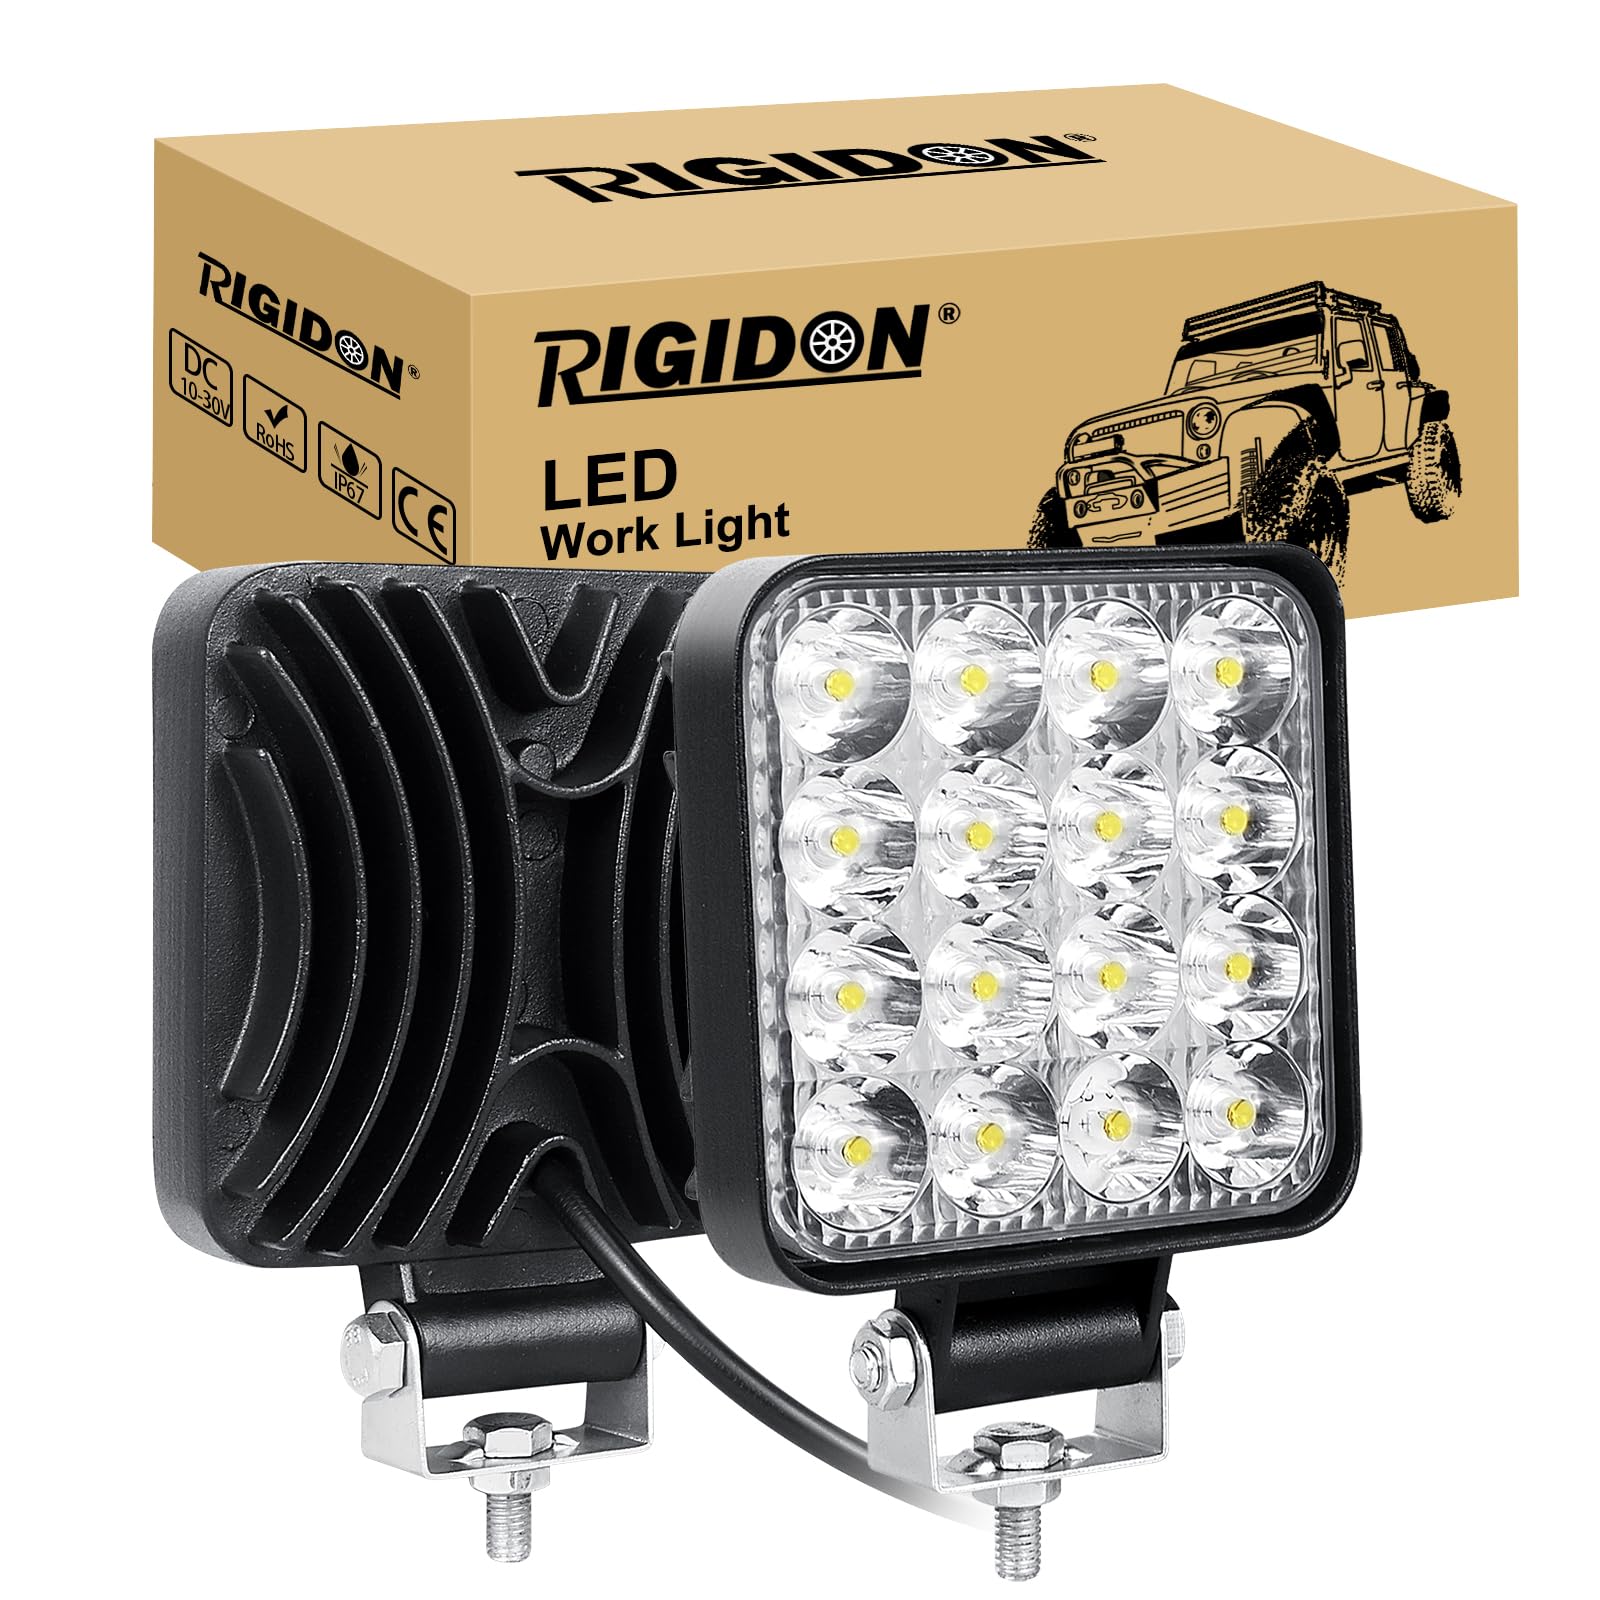 RIGIDON 2 Pcs Auto quad scheinwerfer, 3.3 Zoll mini 48W Spot Strahler offroad beleuchtung für SUV ATV Traktor LKW 4x4, 6000K Weiß led nebelscheinwerfer, led arbeitsscheinwerfer, led arbeitslicht von RIGIDON